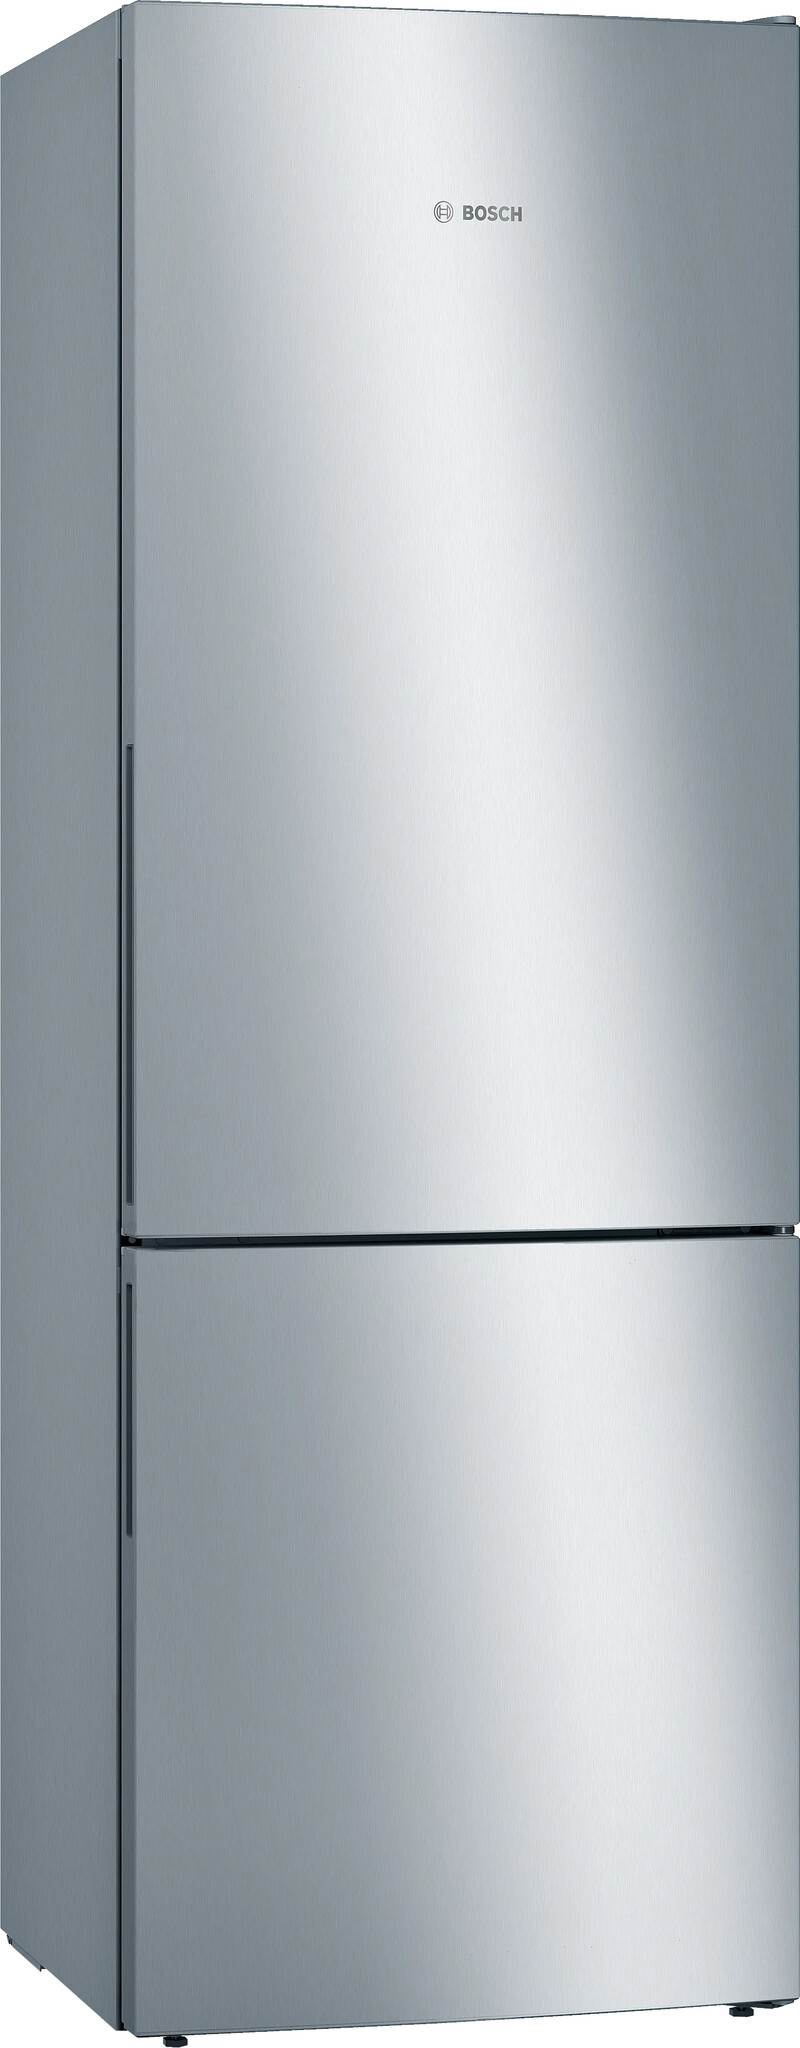 Bosch Bosch Serie 6 KGE49AICAG 70/30 Fridge Freezer with VitaFresh, 70cm Wide – 413L Capacity, C Energy Rated #364548